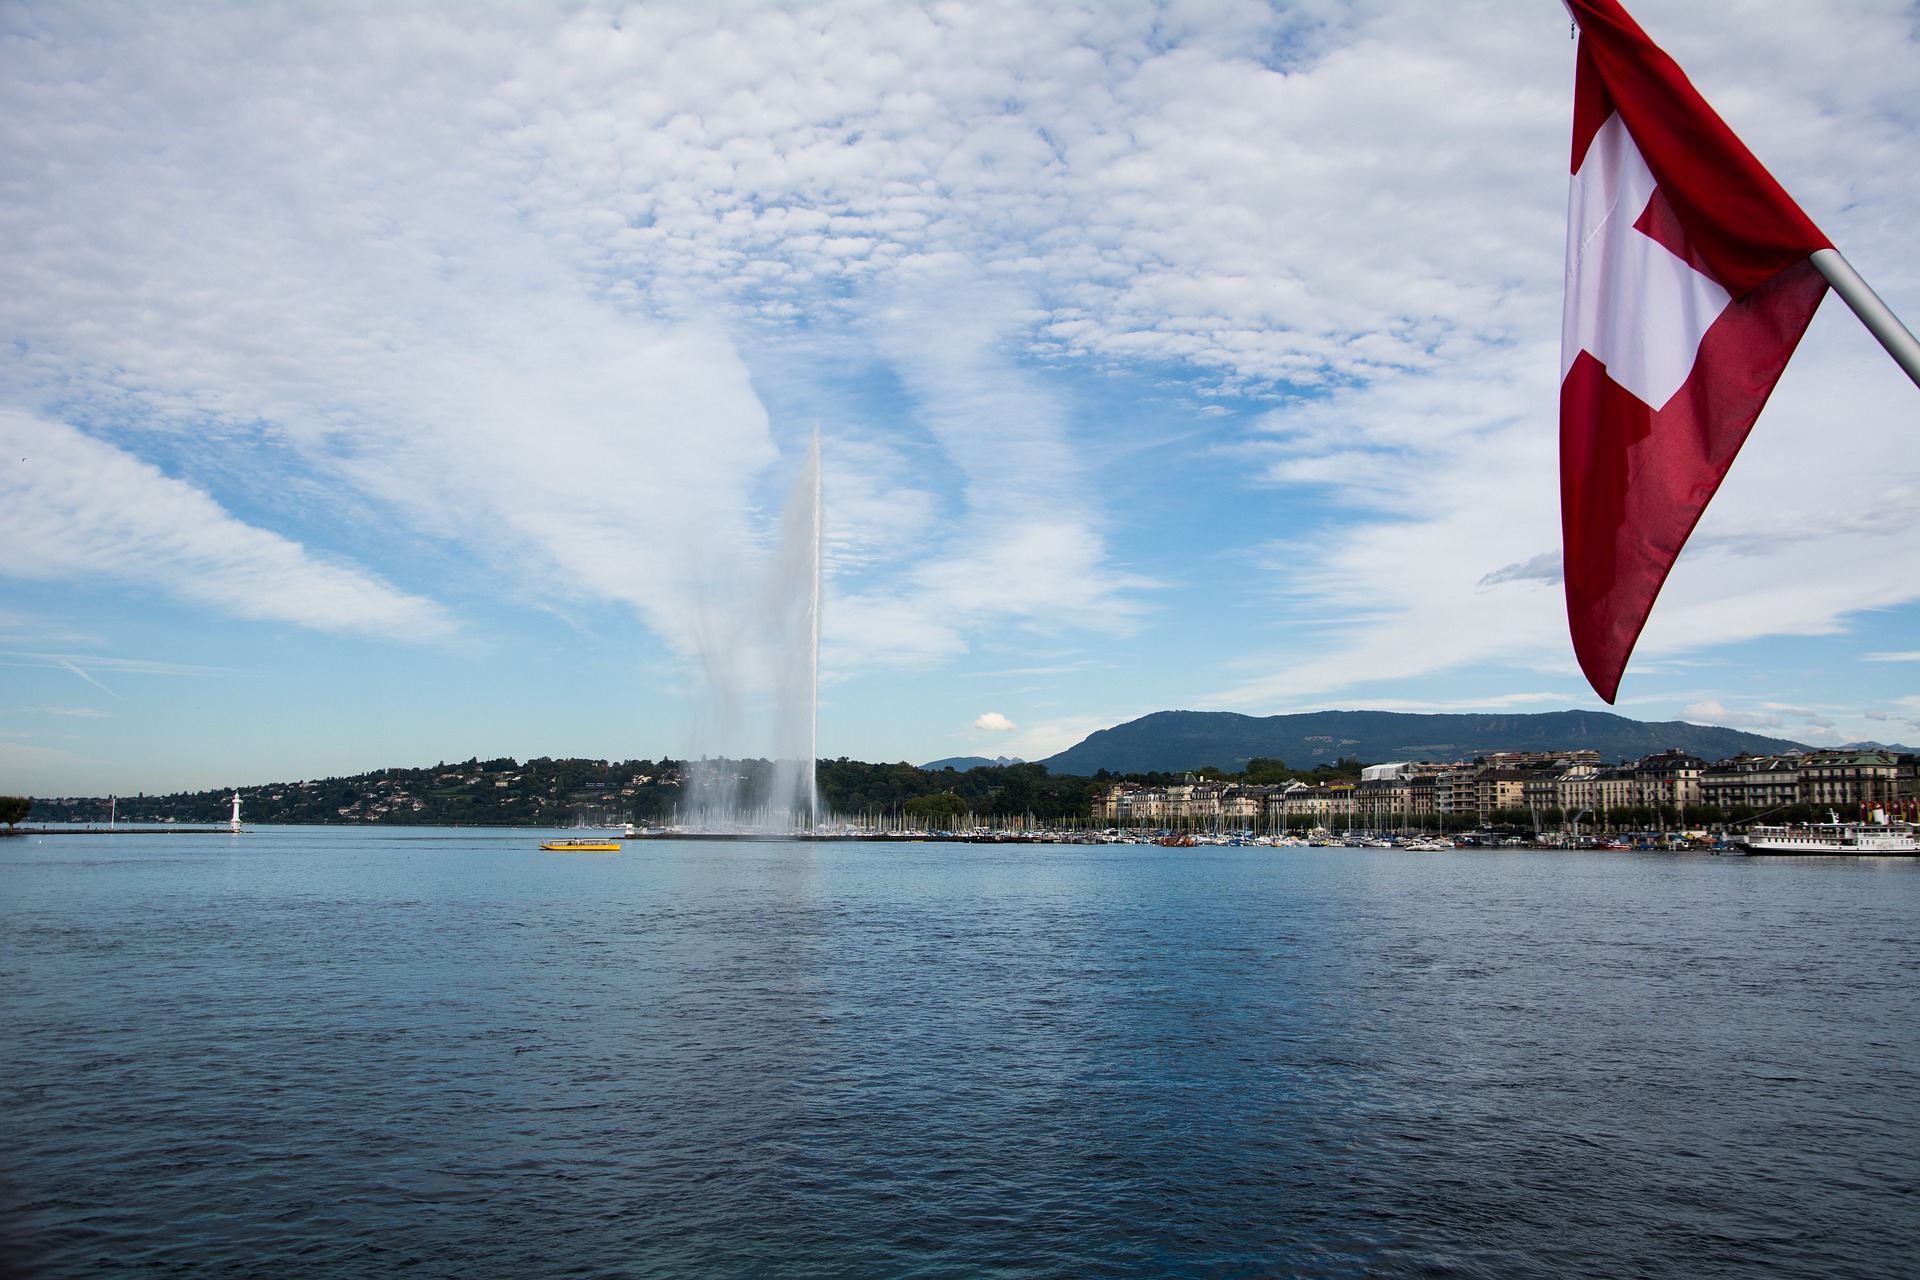 Geneva Boat with flag